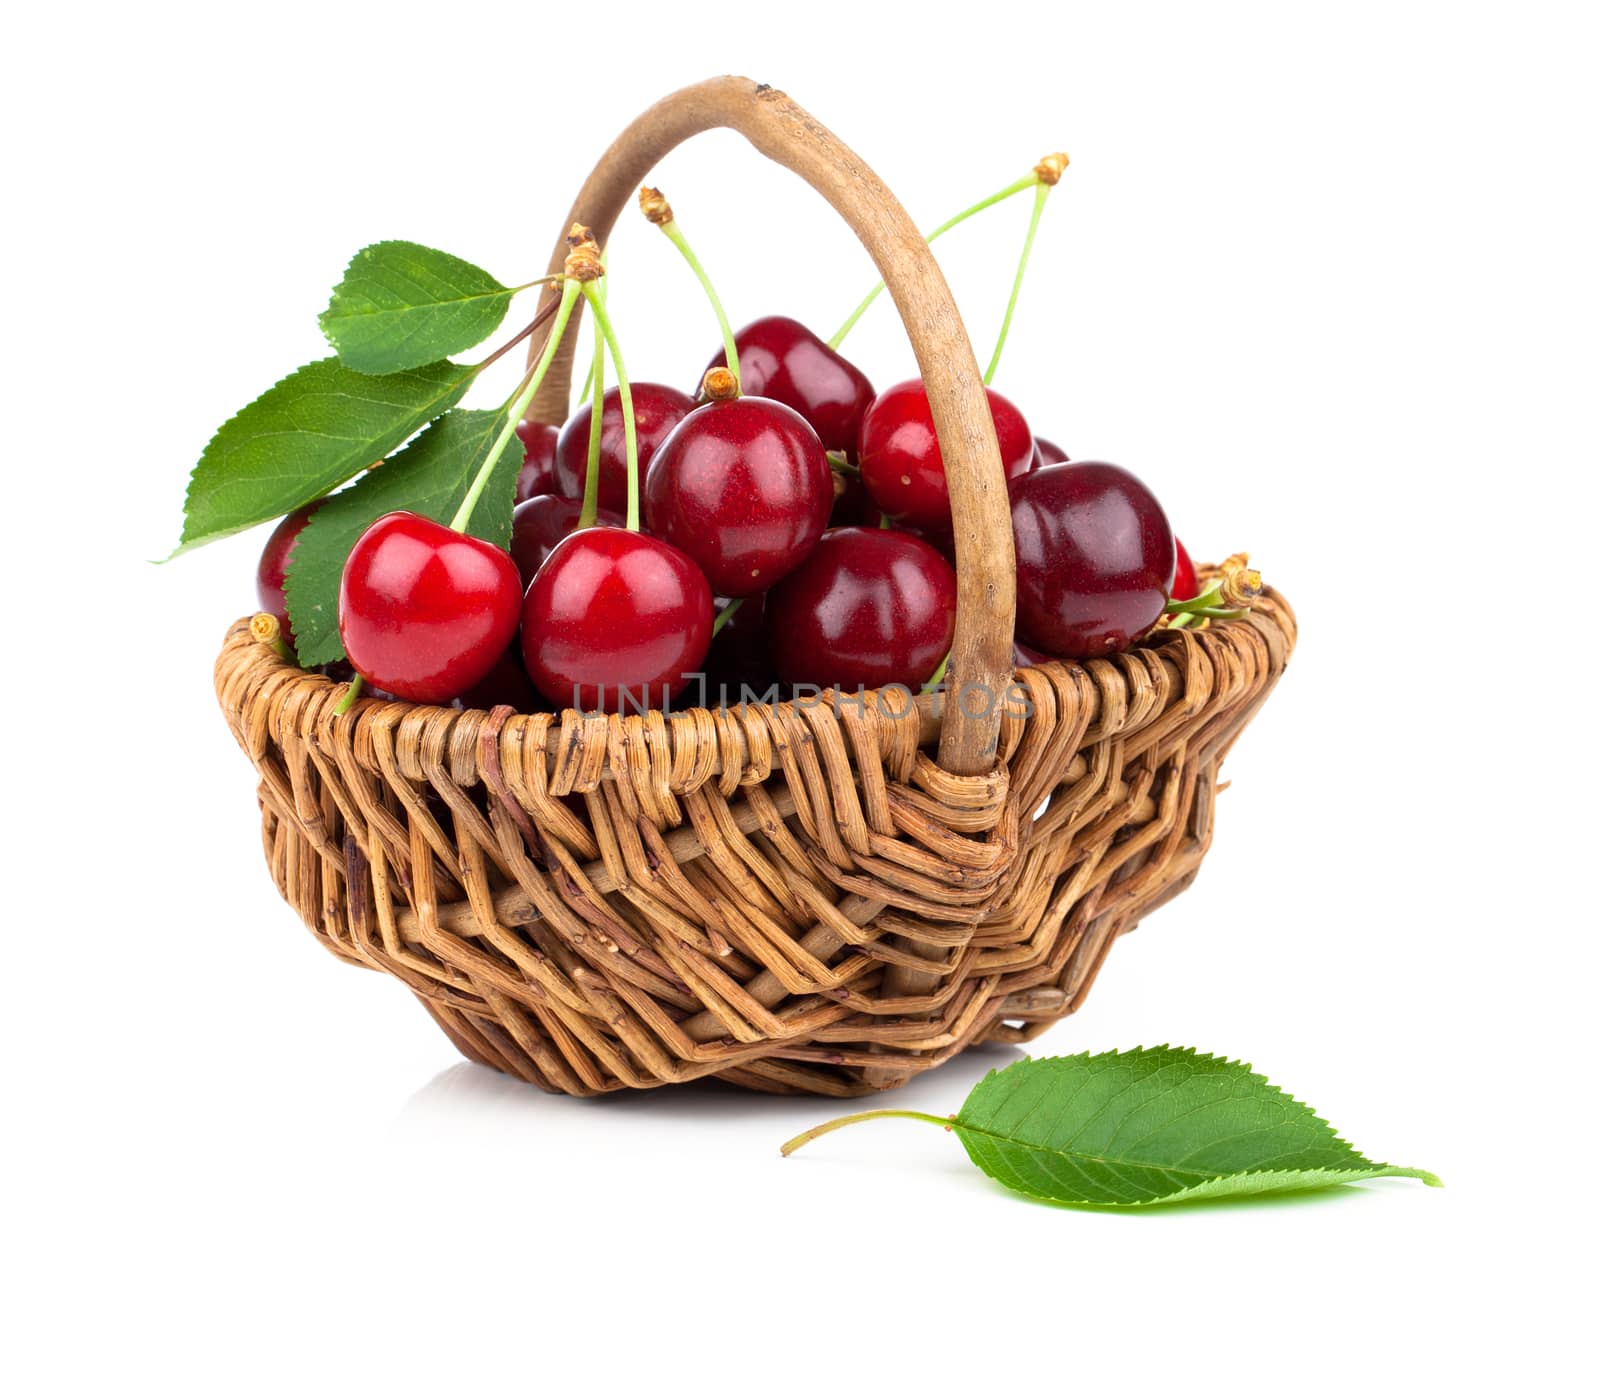 Basket full of fresh red cherry on a white background by motorolka